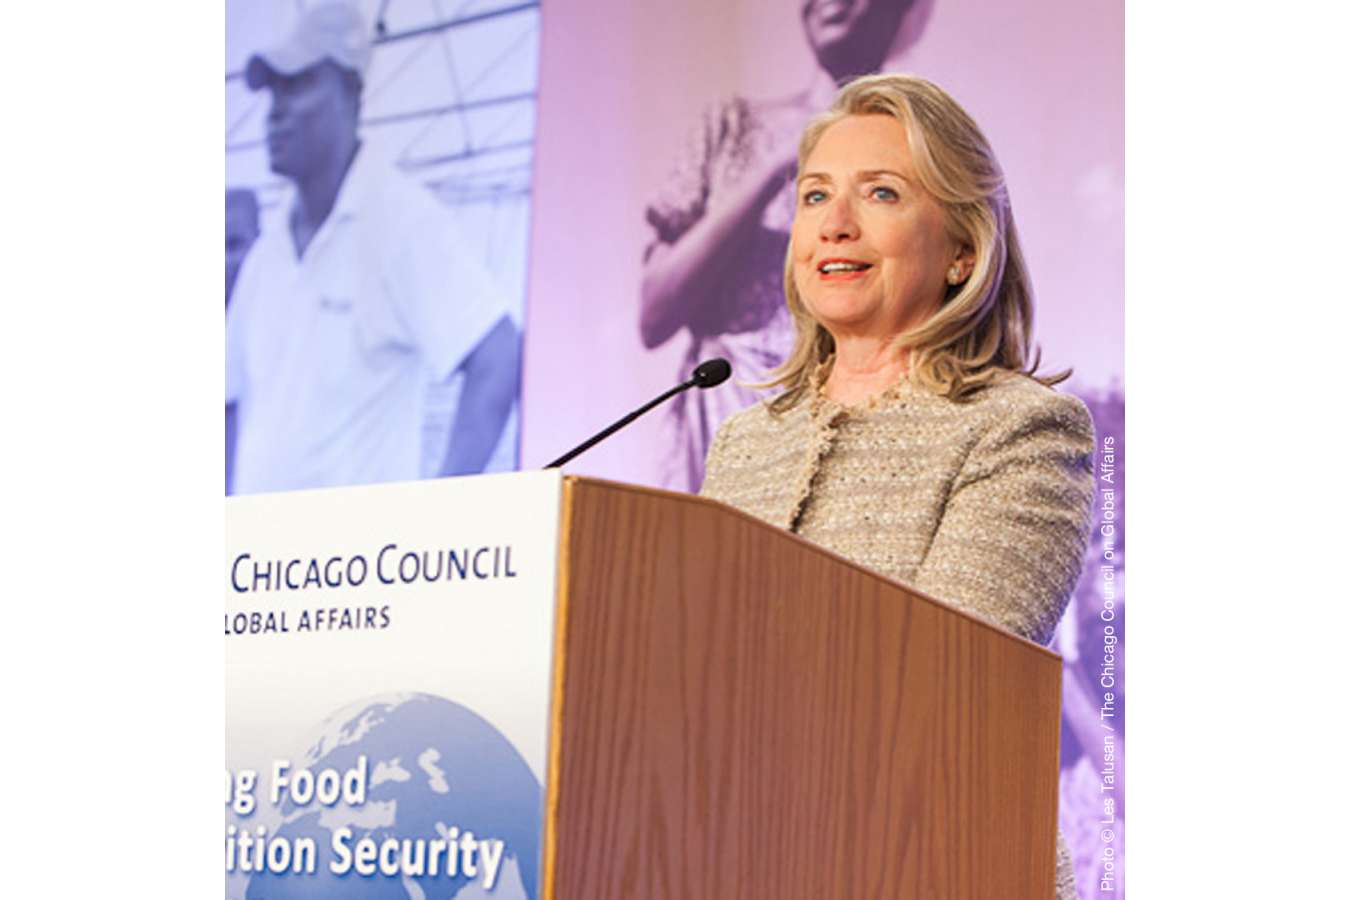 ccg8_3c_hillary_square_LesTalusan : Hillary Rodham Clinton, USA Secretary of State 